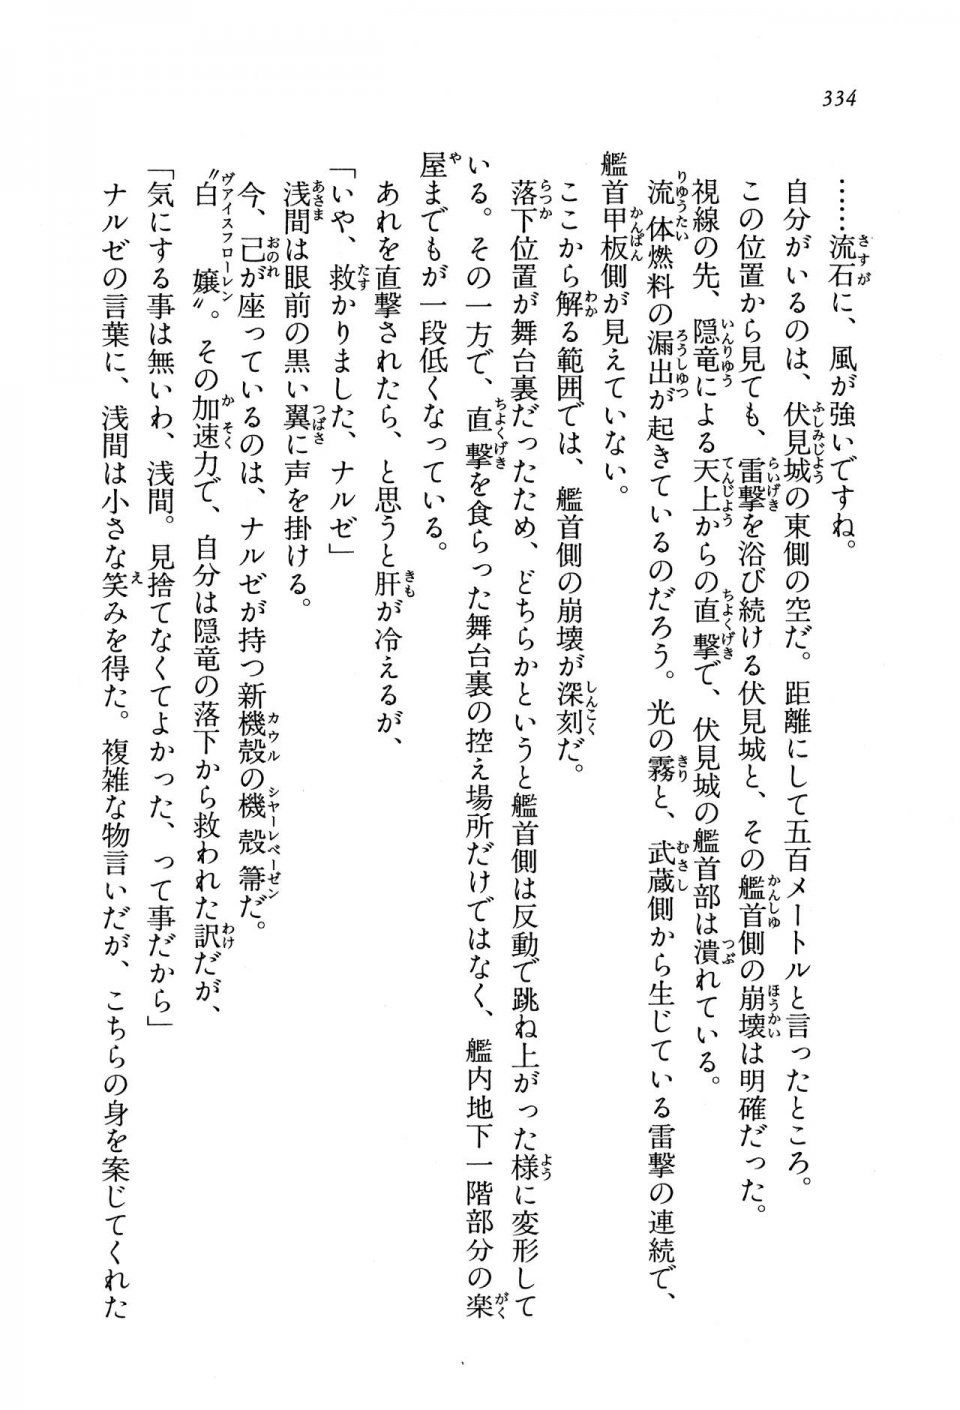 Kyoukai Senjou no Horizon BD Special Mininovel Vol 8(4B) - Photo #338